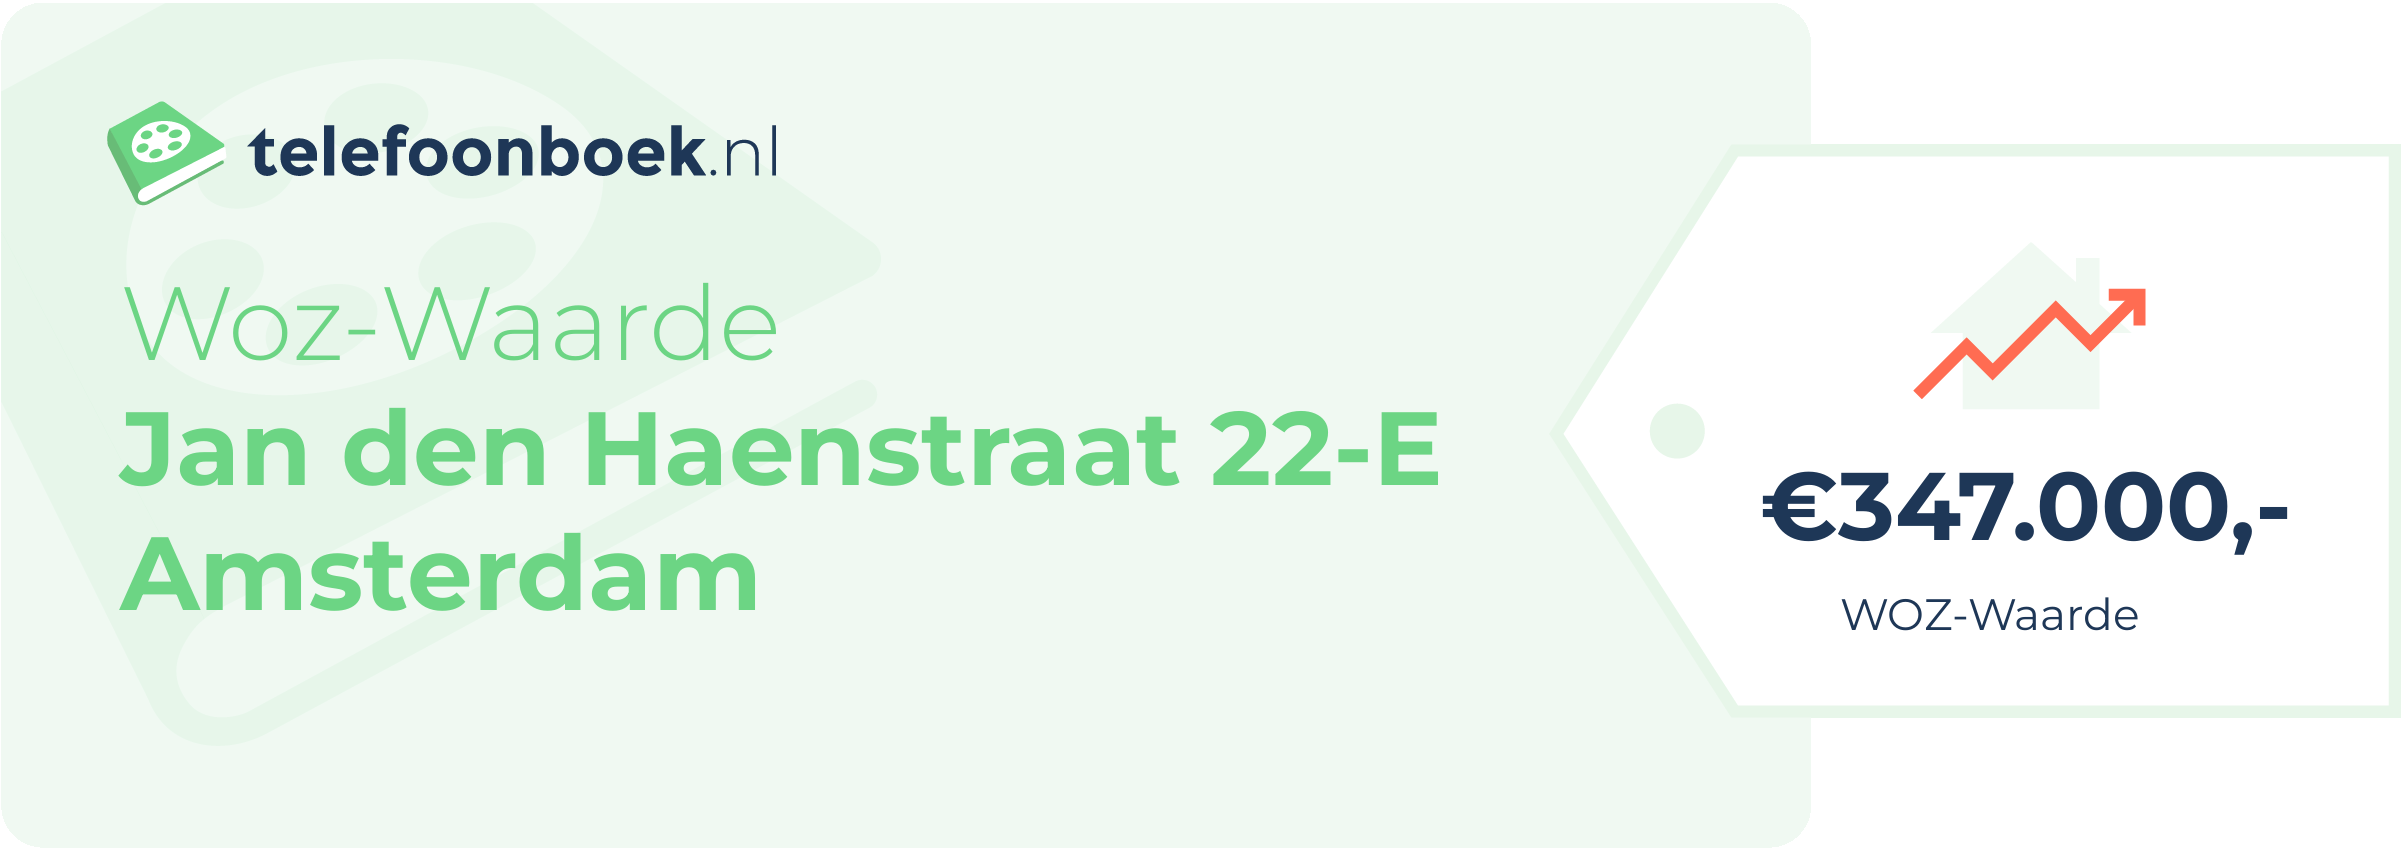 WOZ-waarde Jan Den Haenstraat 22-E Amsterdam